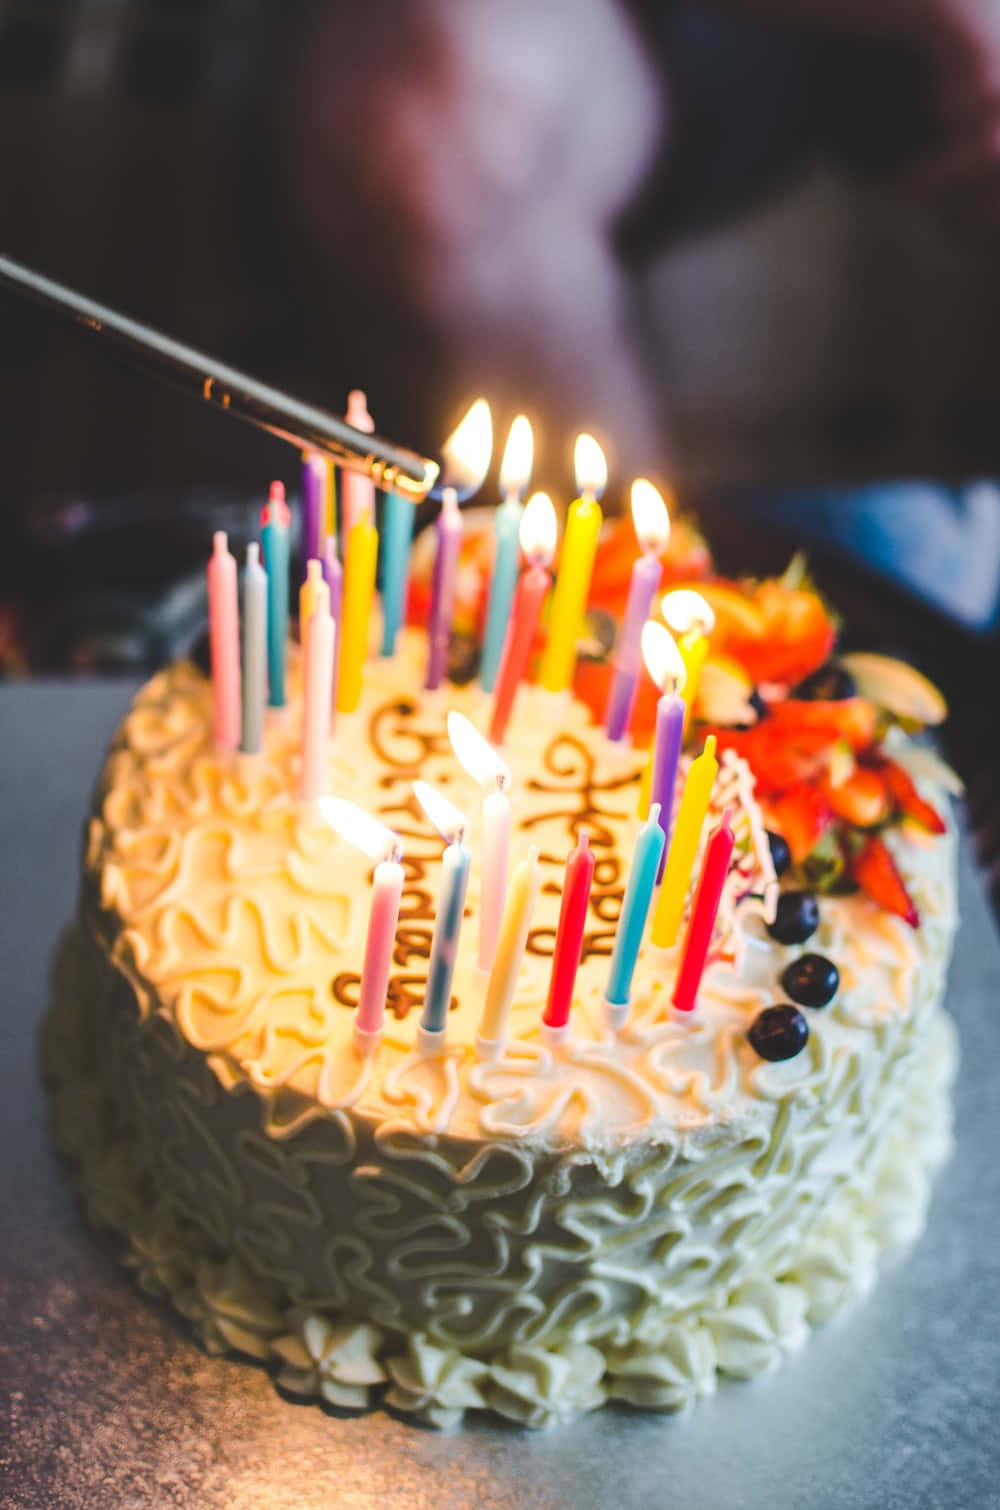 Celebrate with Joy - A Delightful Happy Birthday Cake